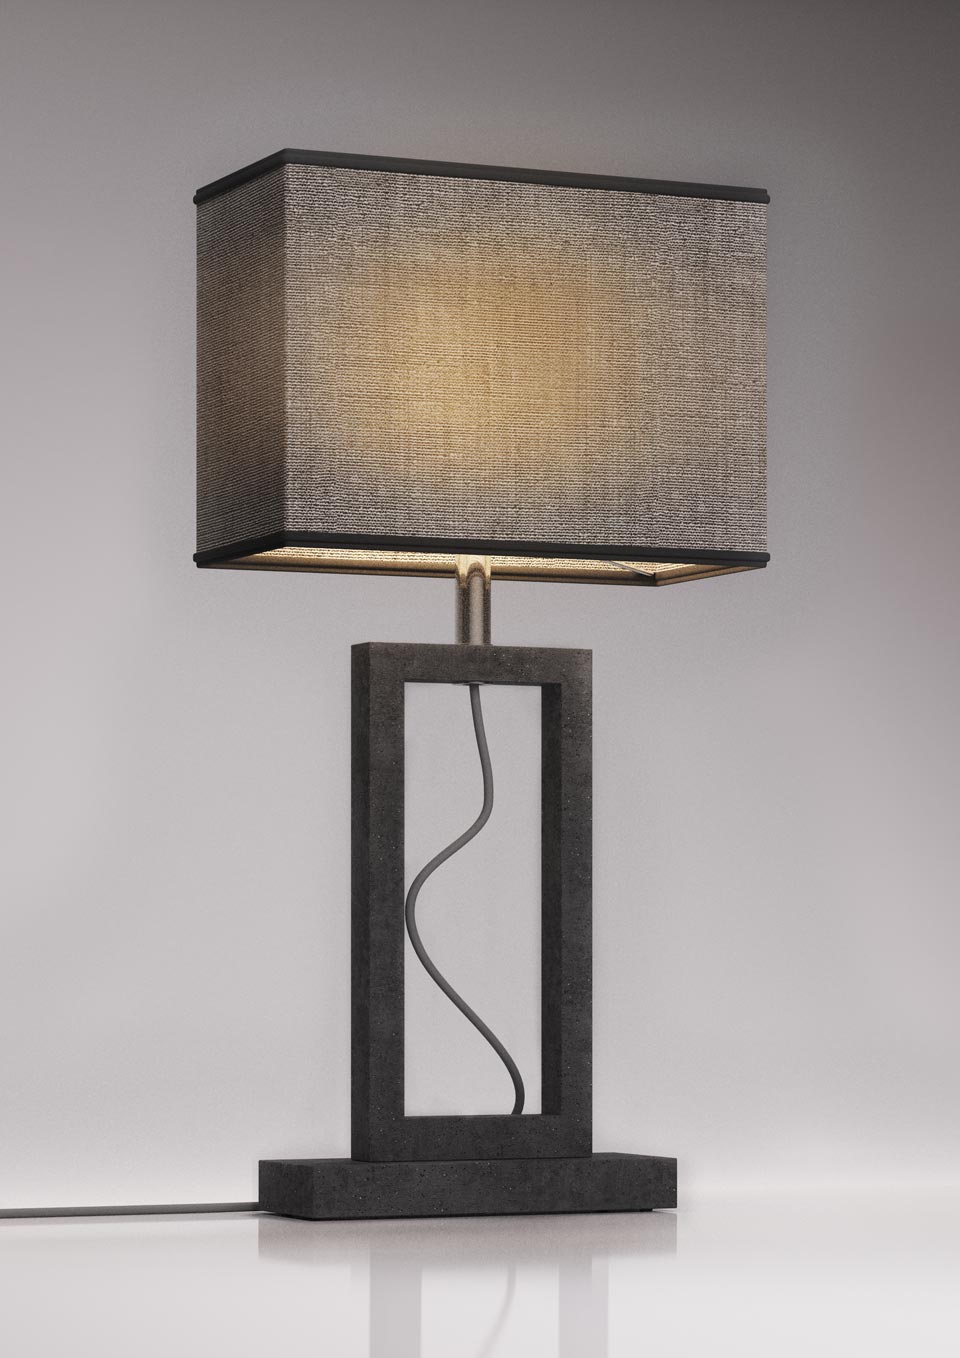 Petite lampe de table en marbre gris Contemporary. Matlight. 